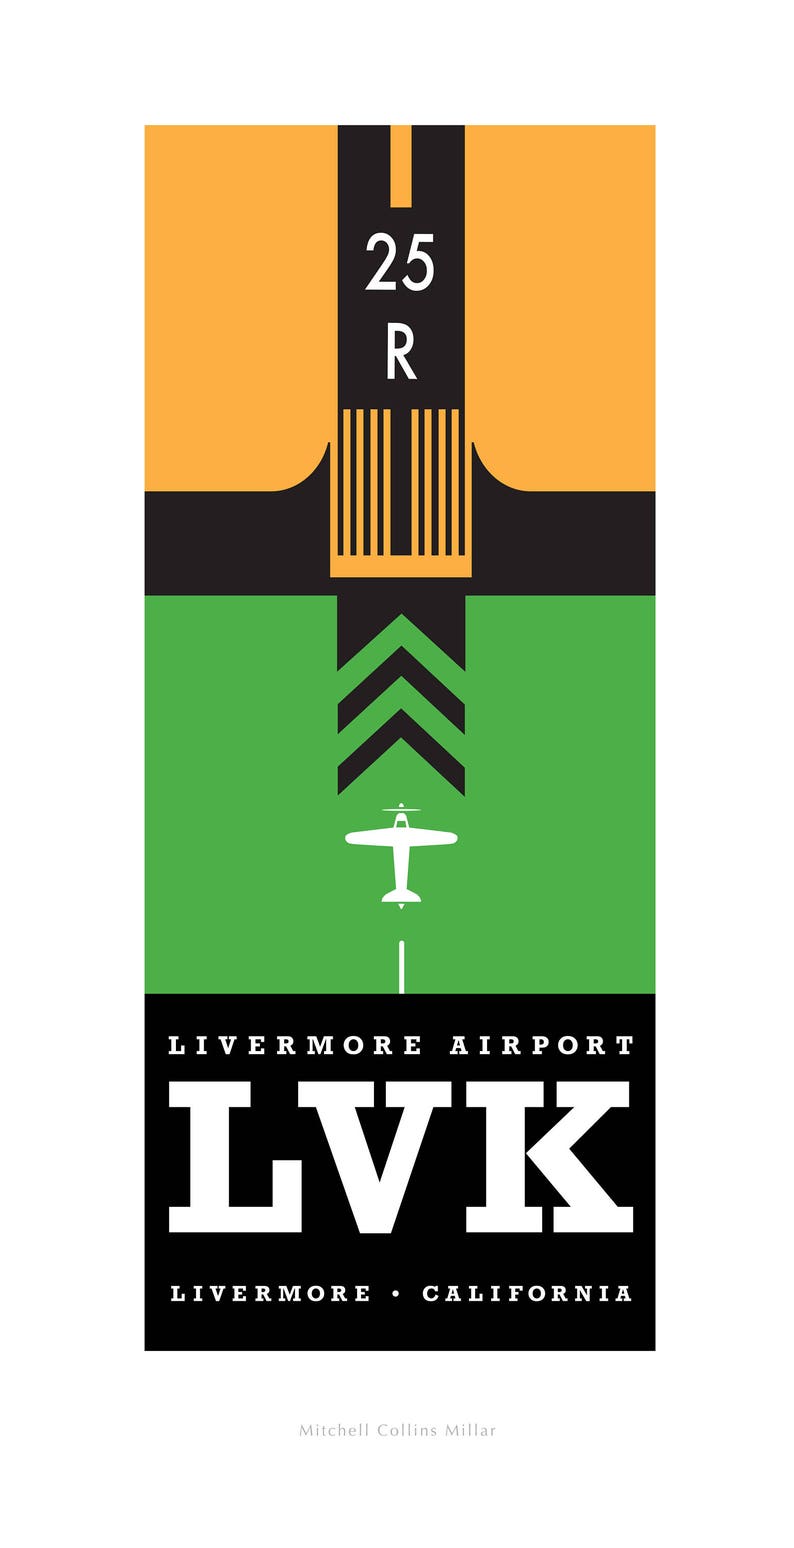 Livermore Airport LVK print image 2